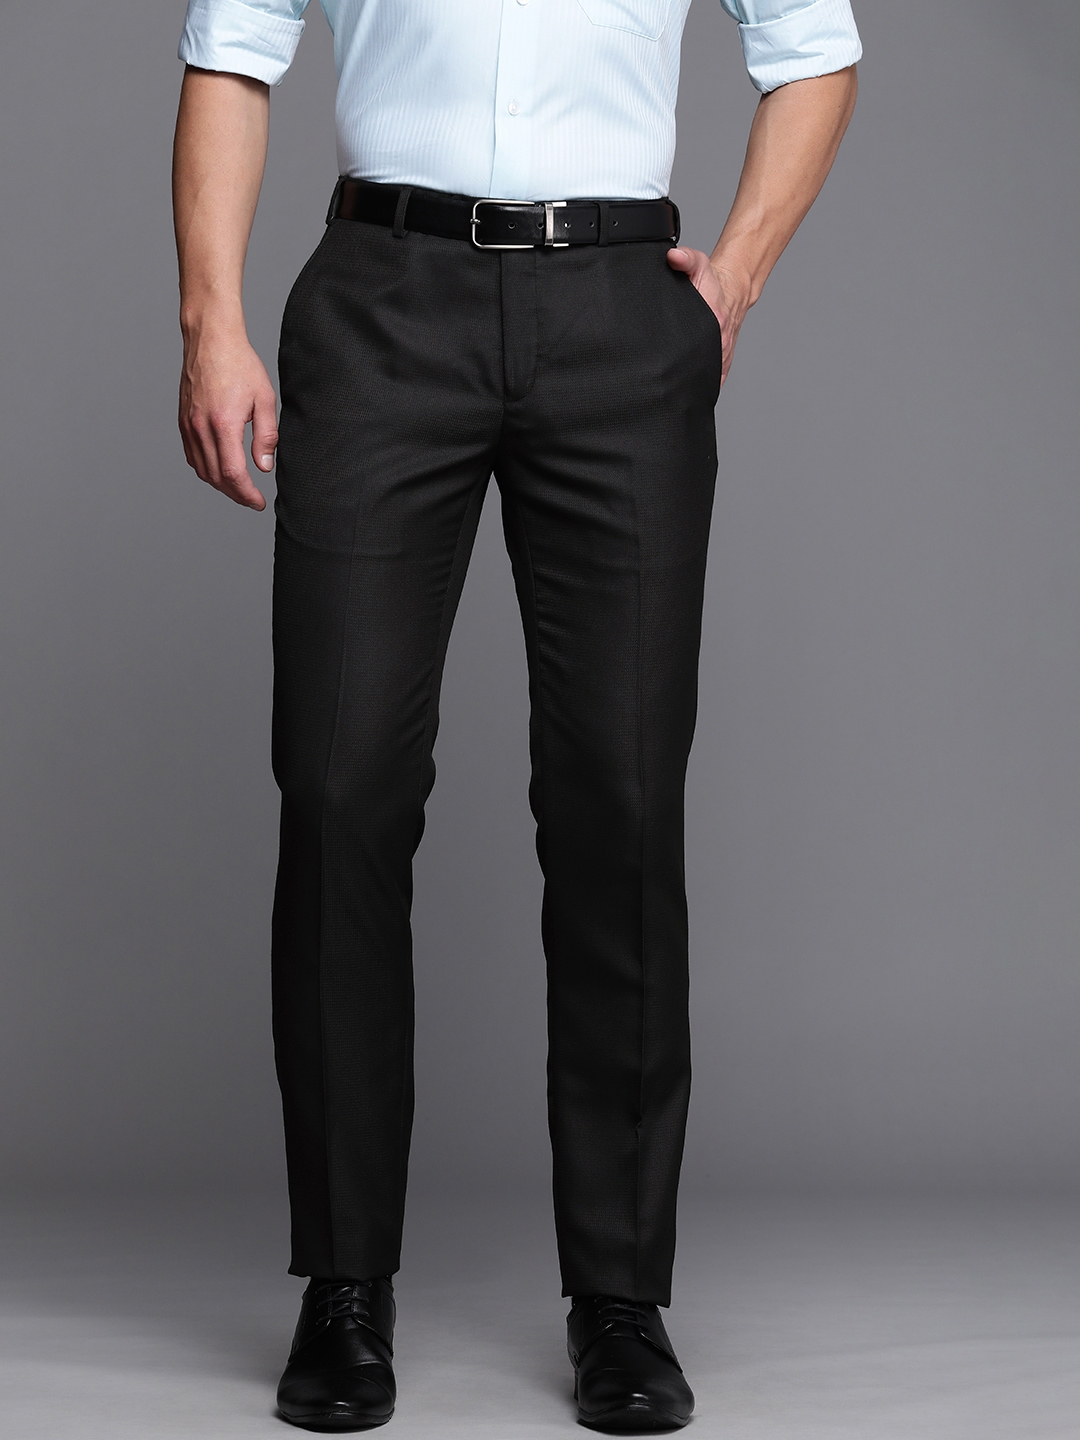 Buy Raymond Men Black Slim Fit Trousers - Trousers for Men 16882184 ...